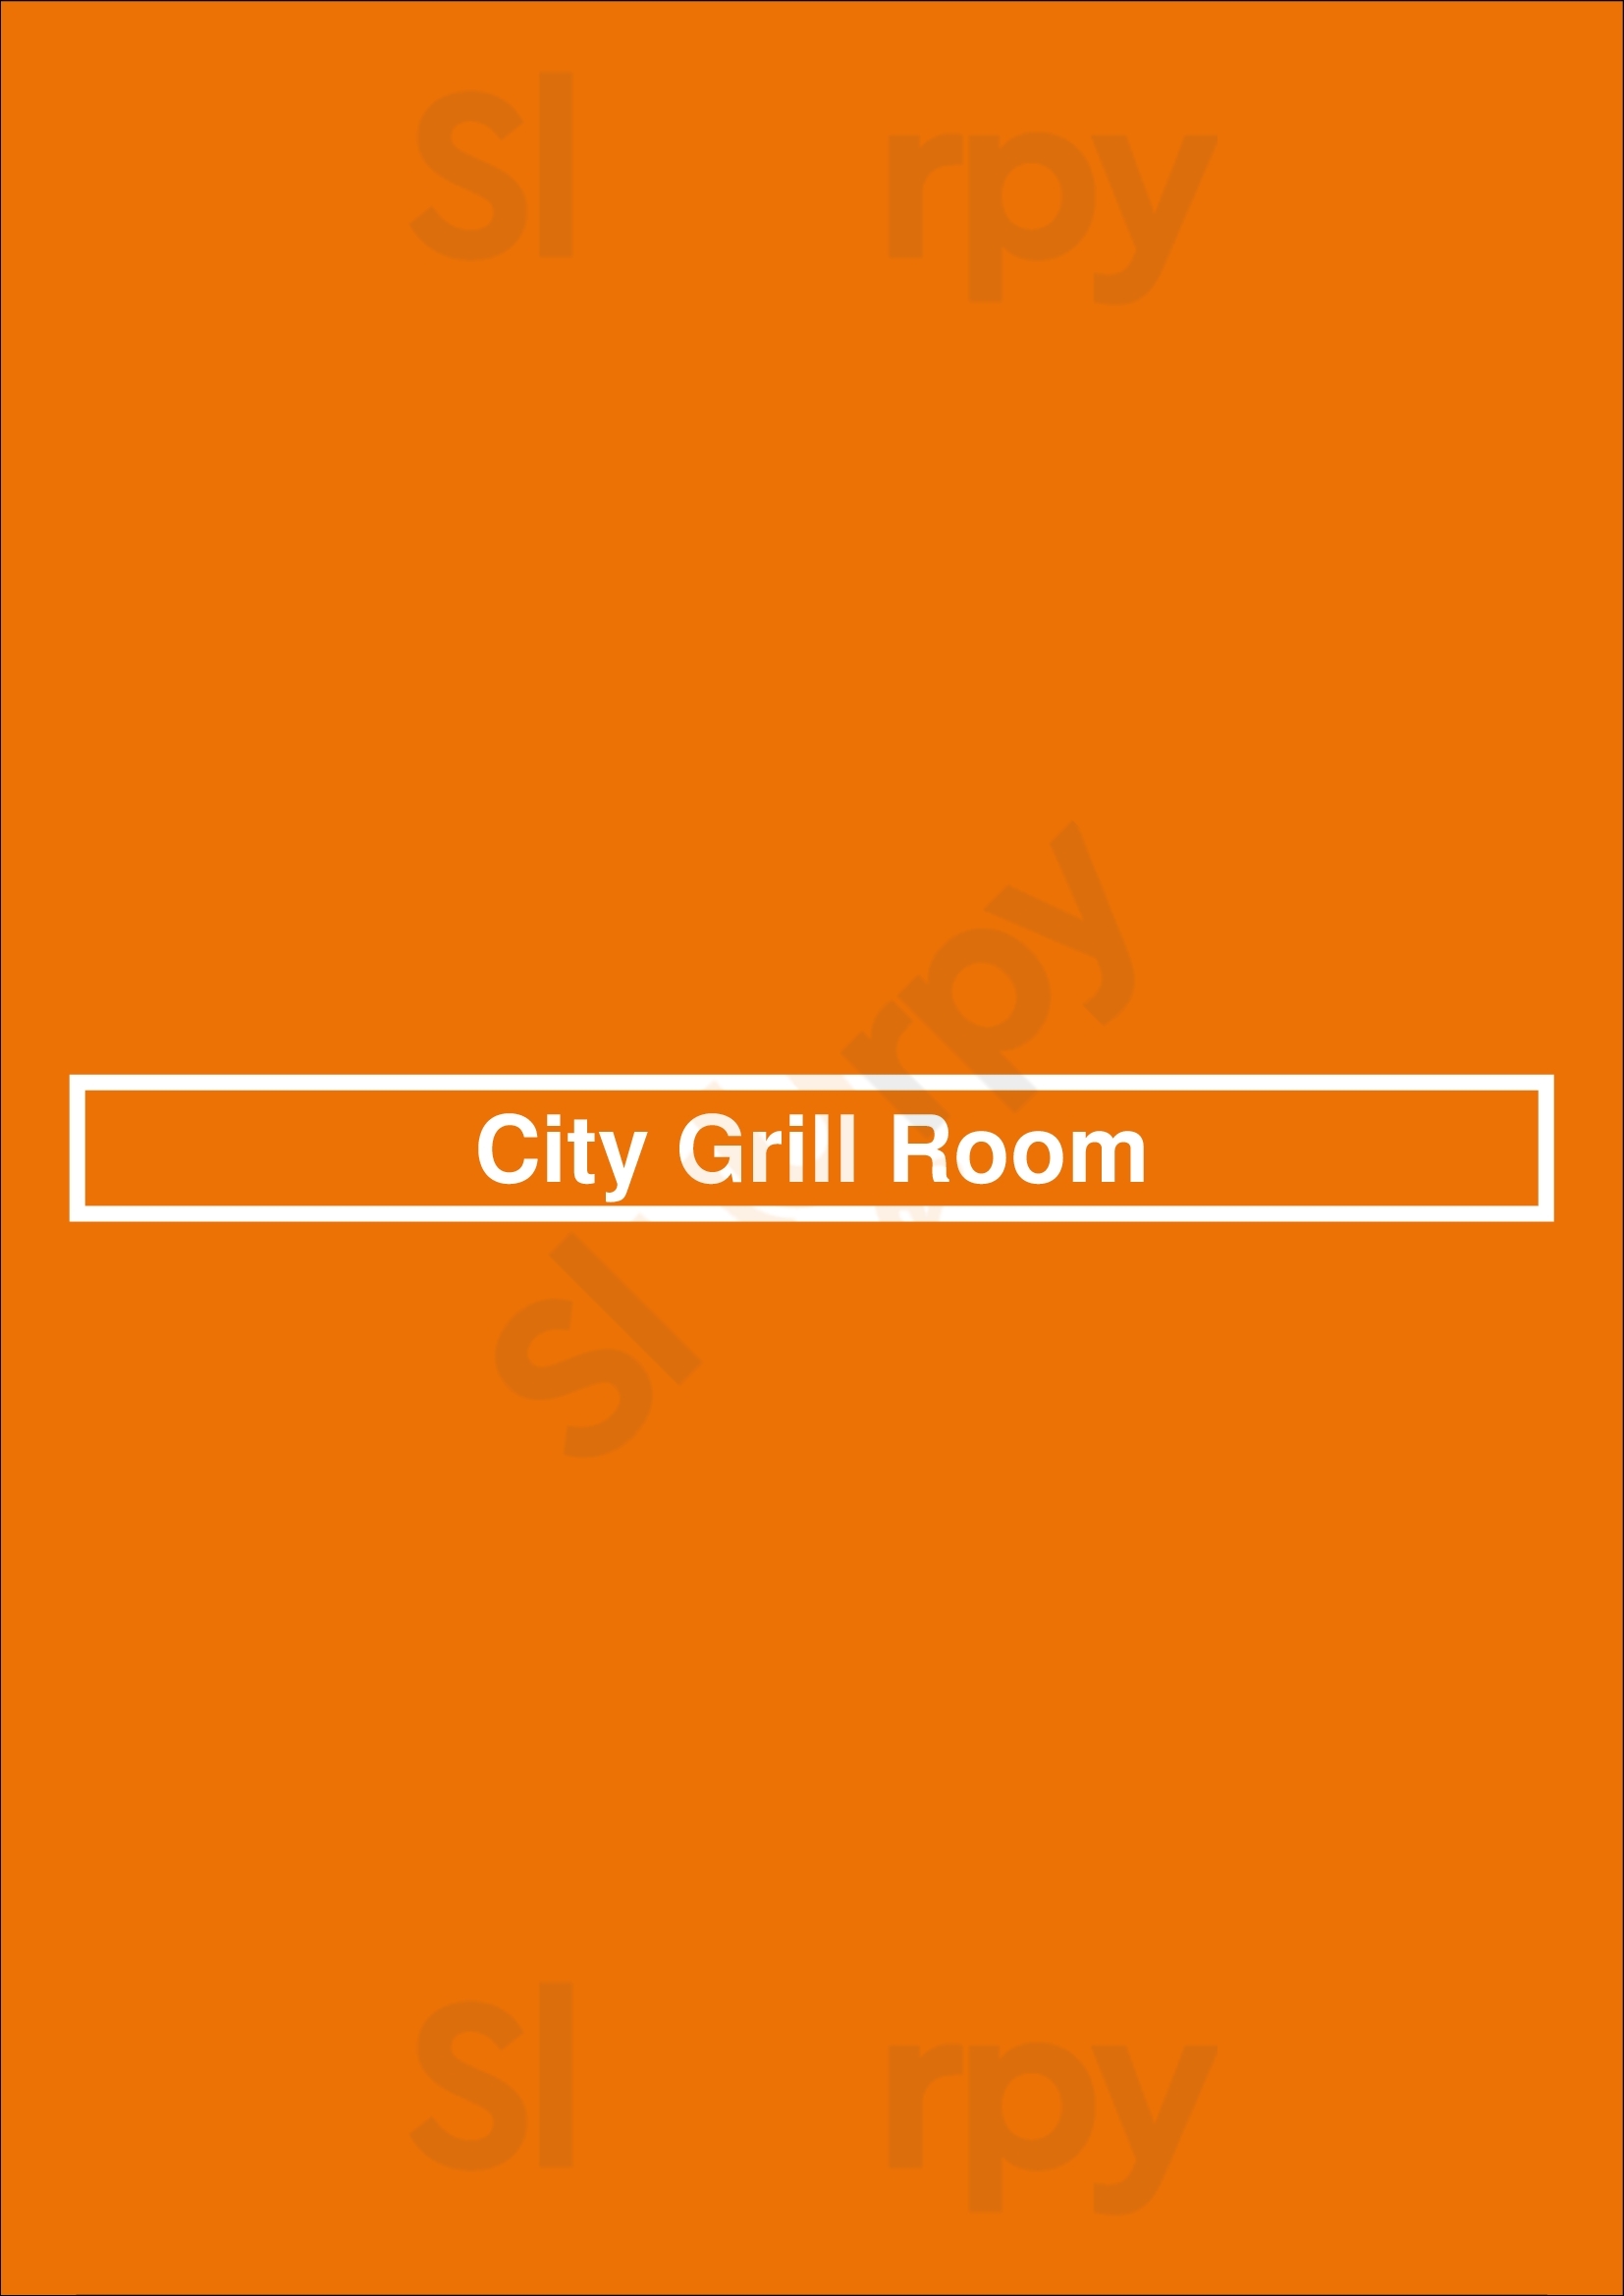 City Grill Room Melbourne Menu - 1